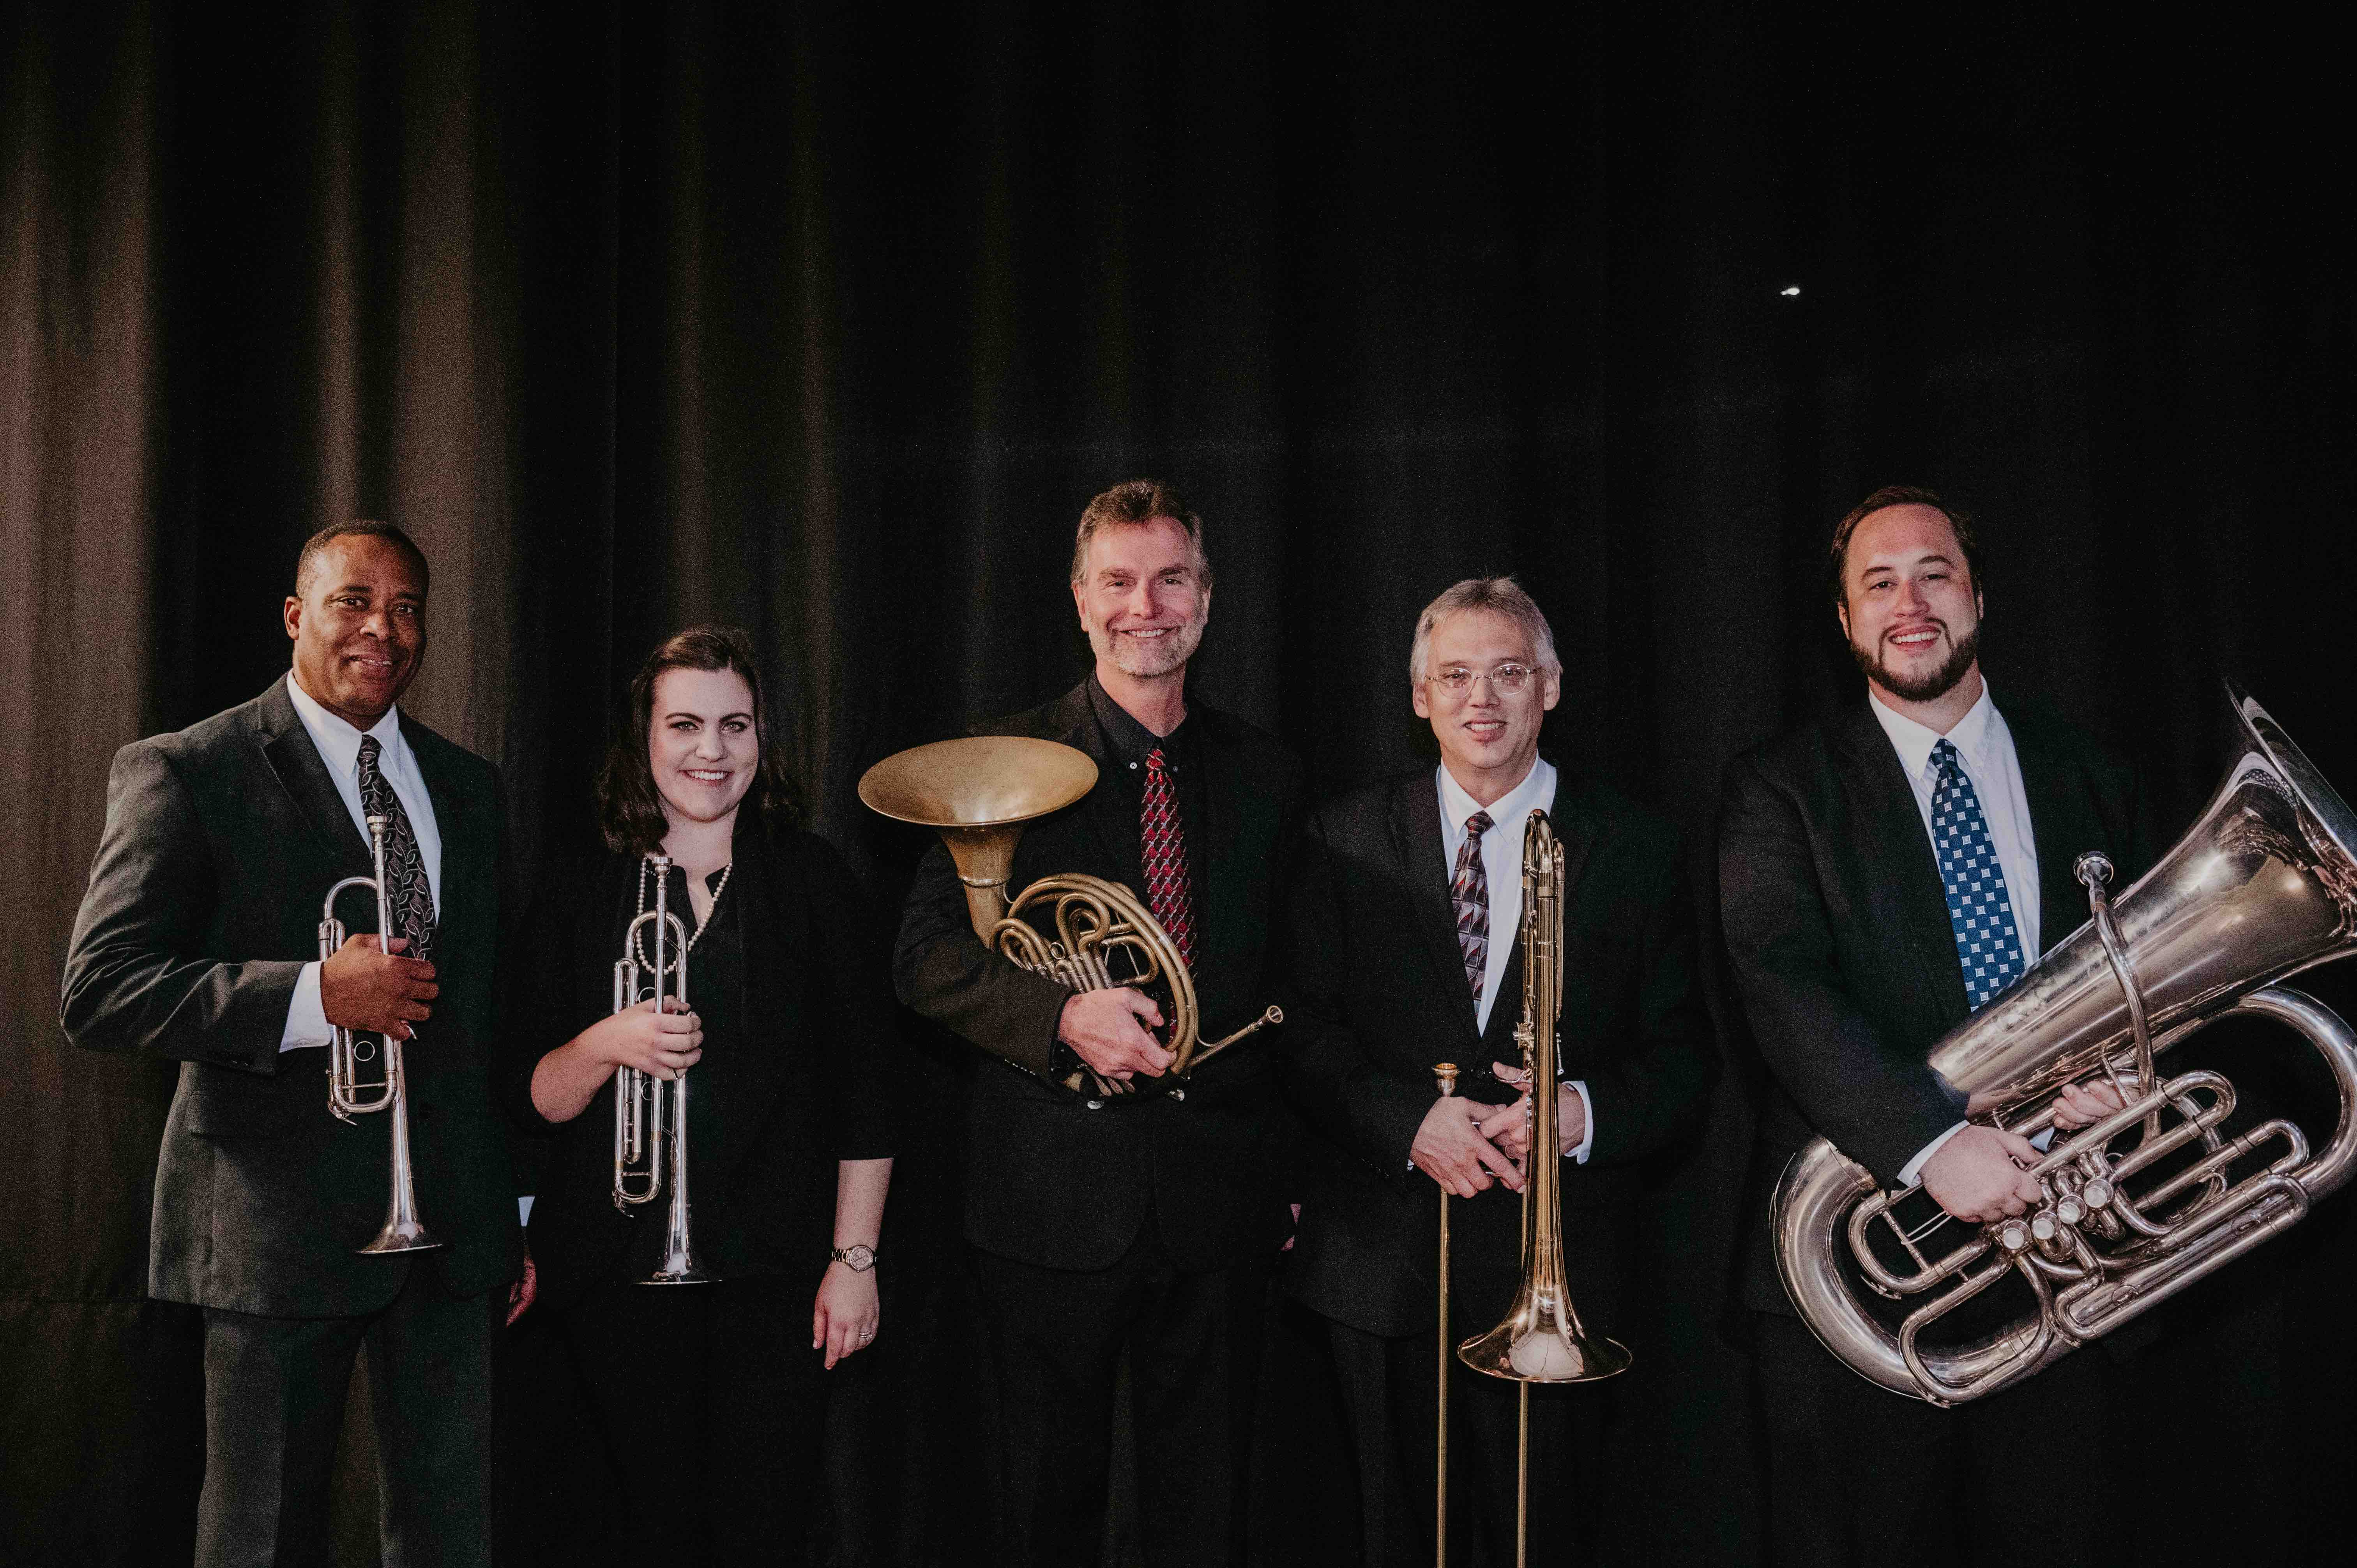 The University of Nebraska Brass Quintet will perform on March 30 in Kimball Hall. The quintet includes left to right: Darryl White, trumpet; Catherine Sharp-Martinez, trumpet; Alan Mattingly, horn; Scott Anderson, trombone; and Ravil "Bo" Atlas, tuba.